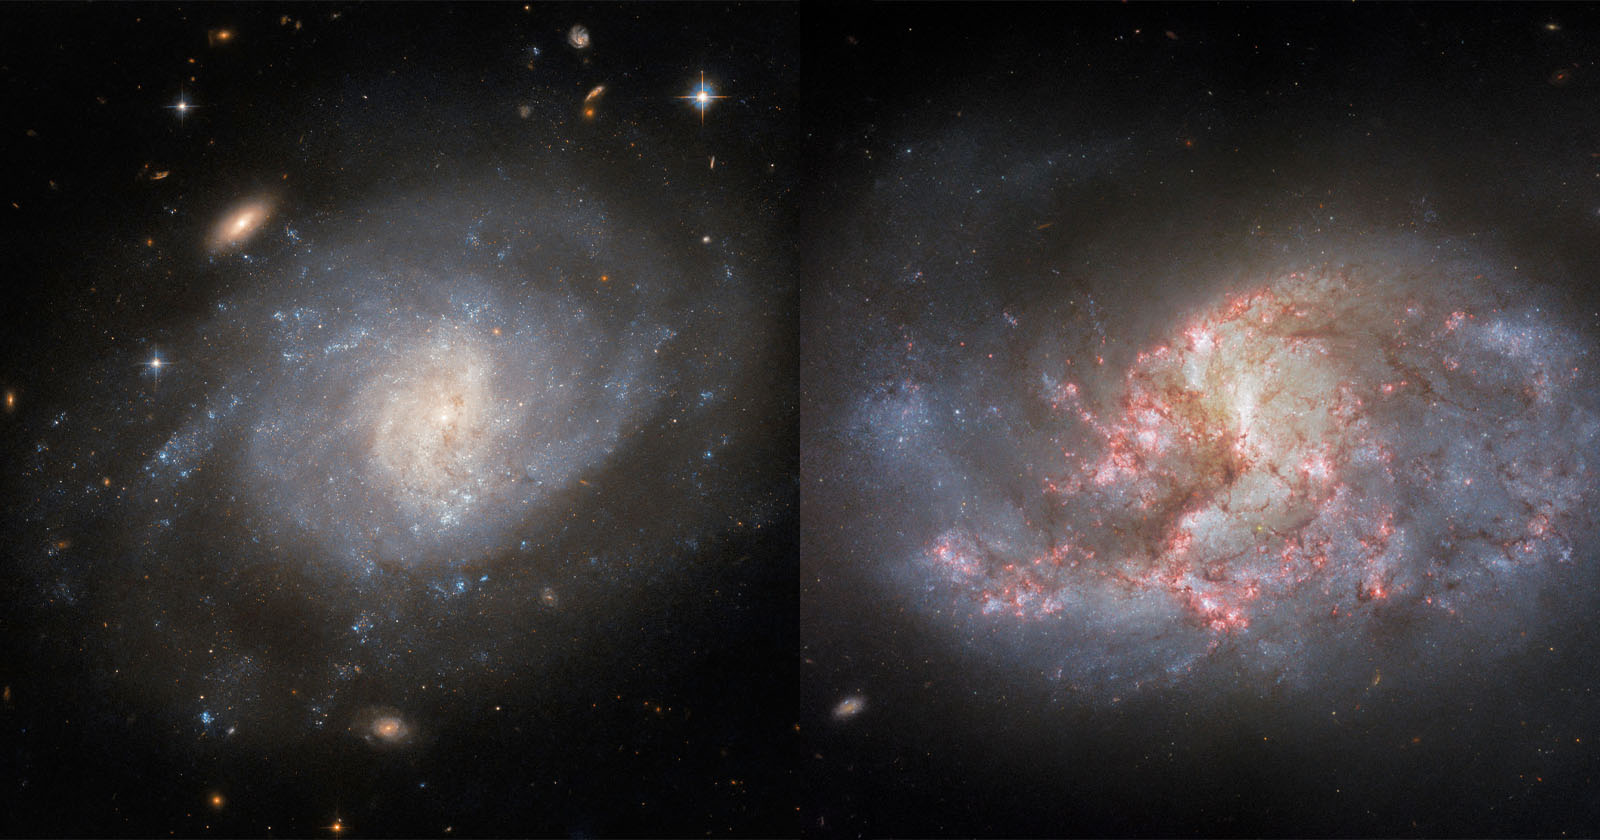  hubble looks galaxy bombastic origins shows 